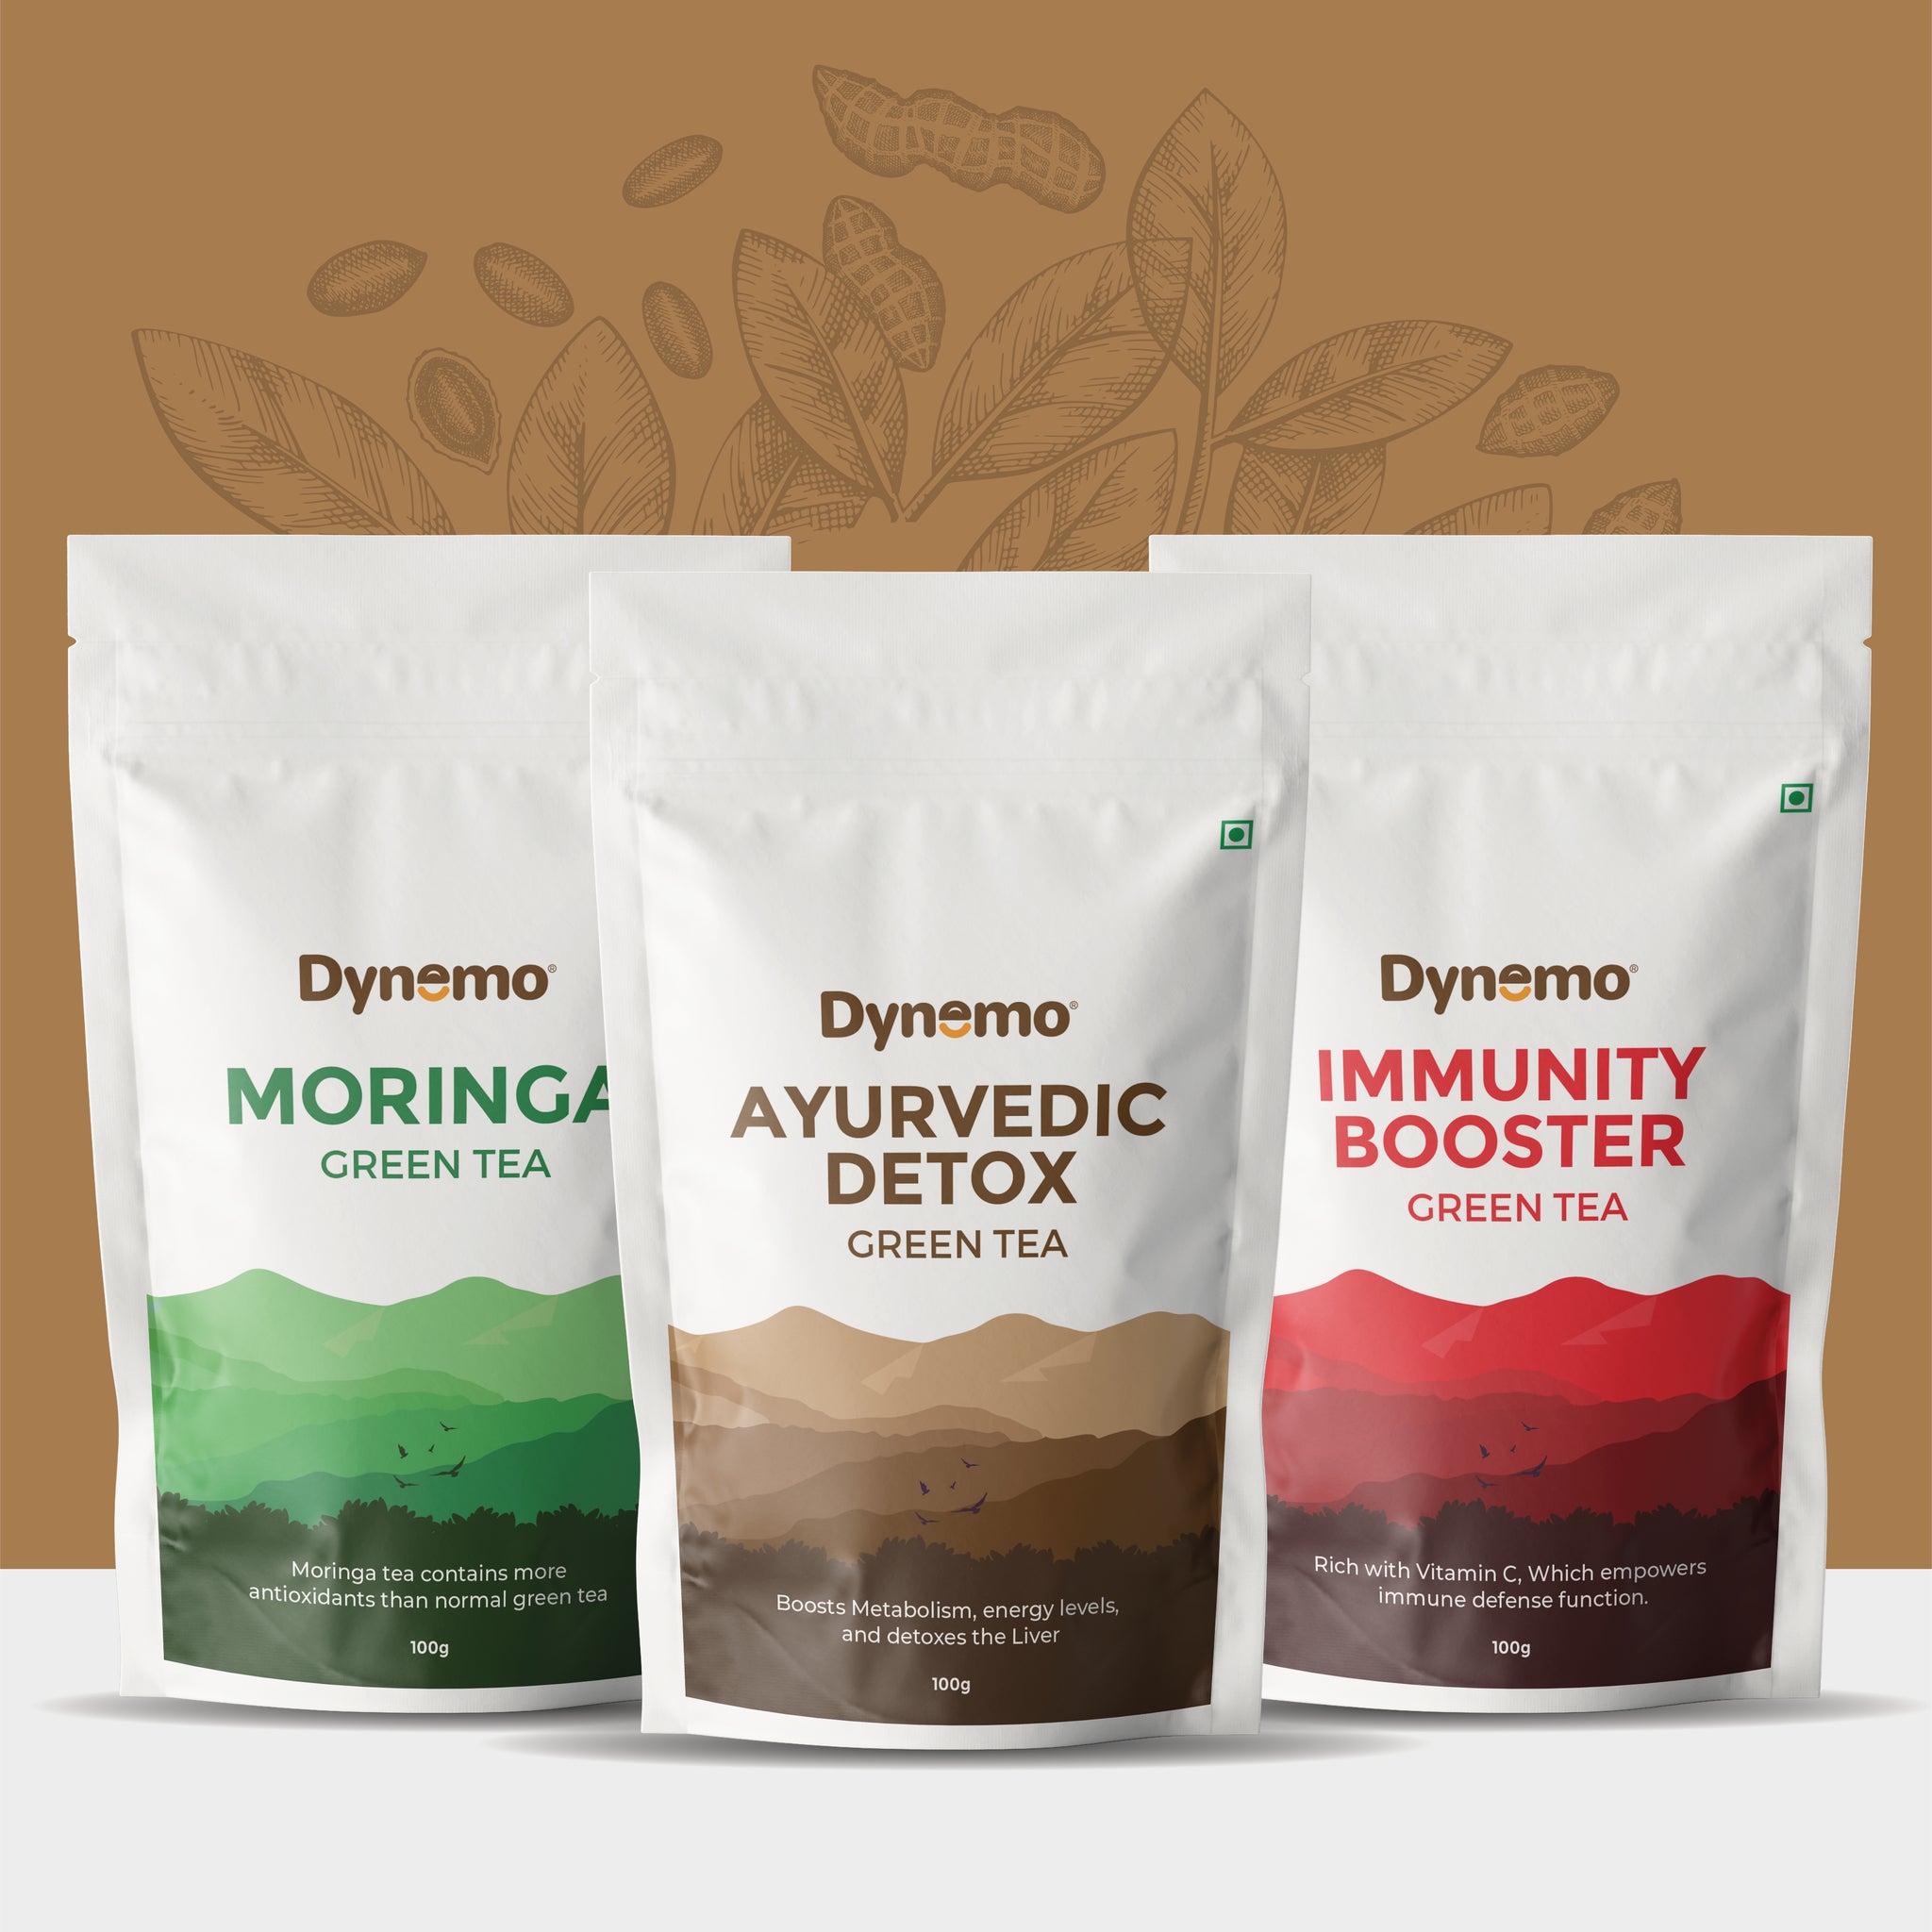 Dynemo Ayurvedic Detox Green Tea 100g + Dynemo Moringa Green Tea 100g + Dynemo Immunity Booster green Tea 100g